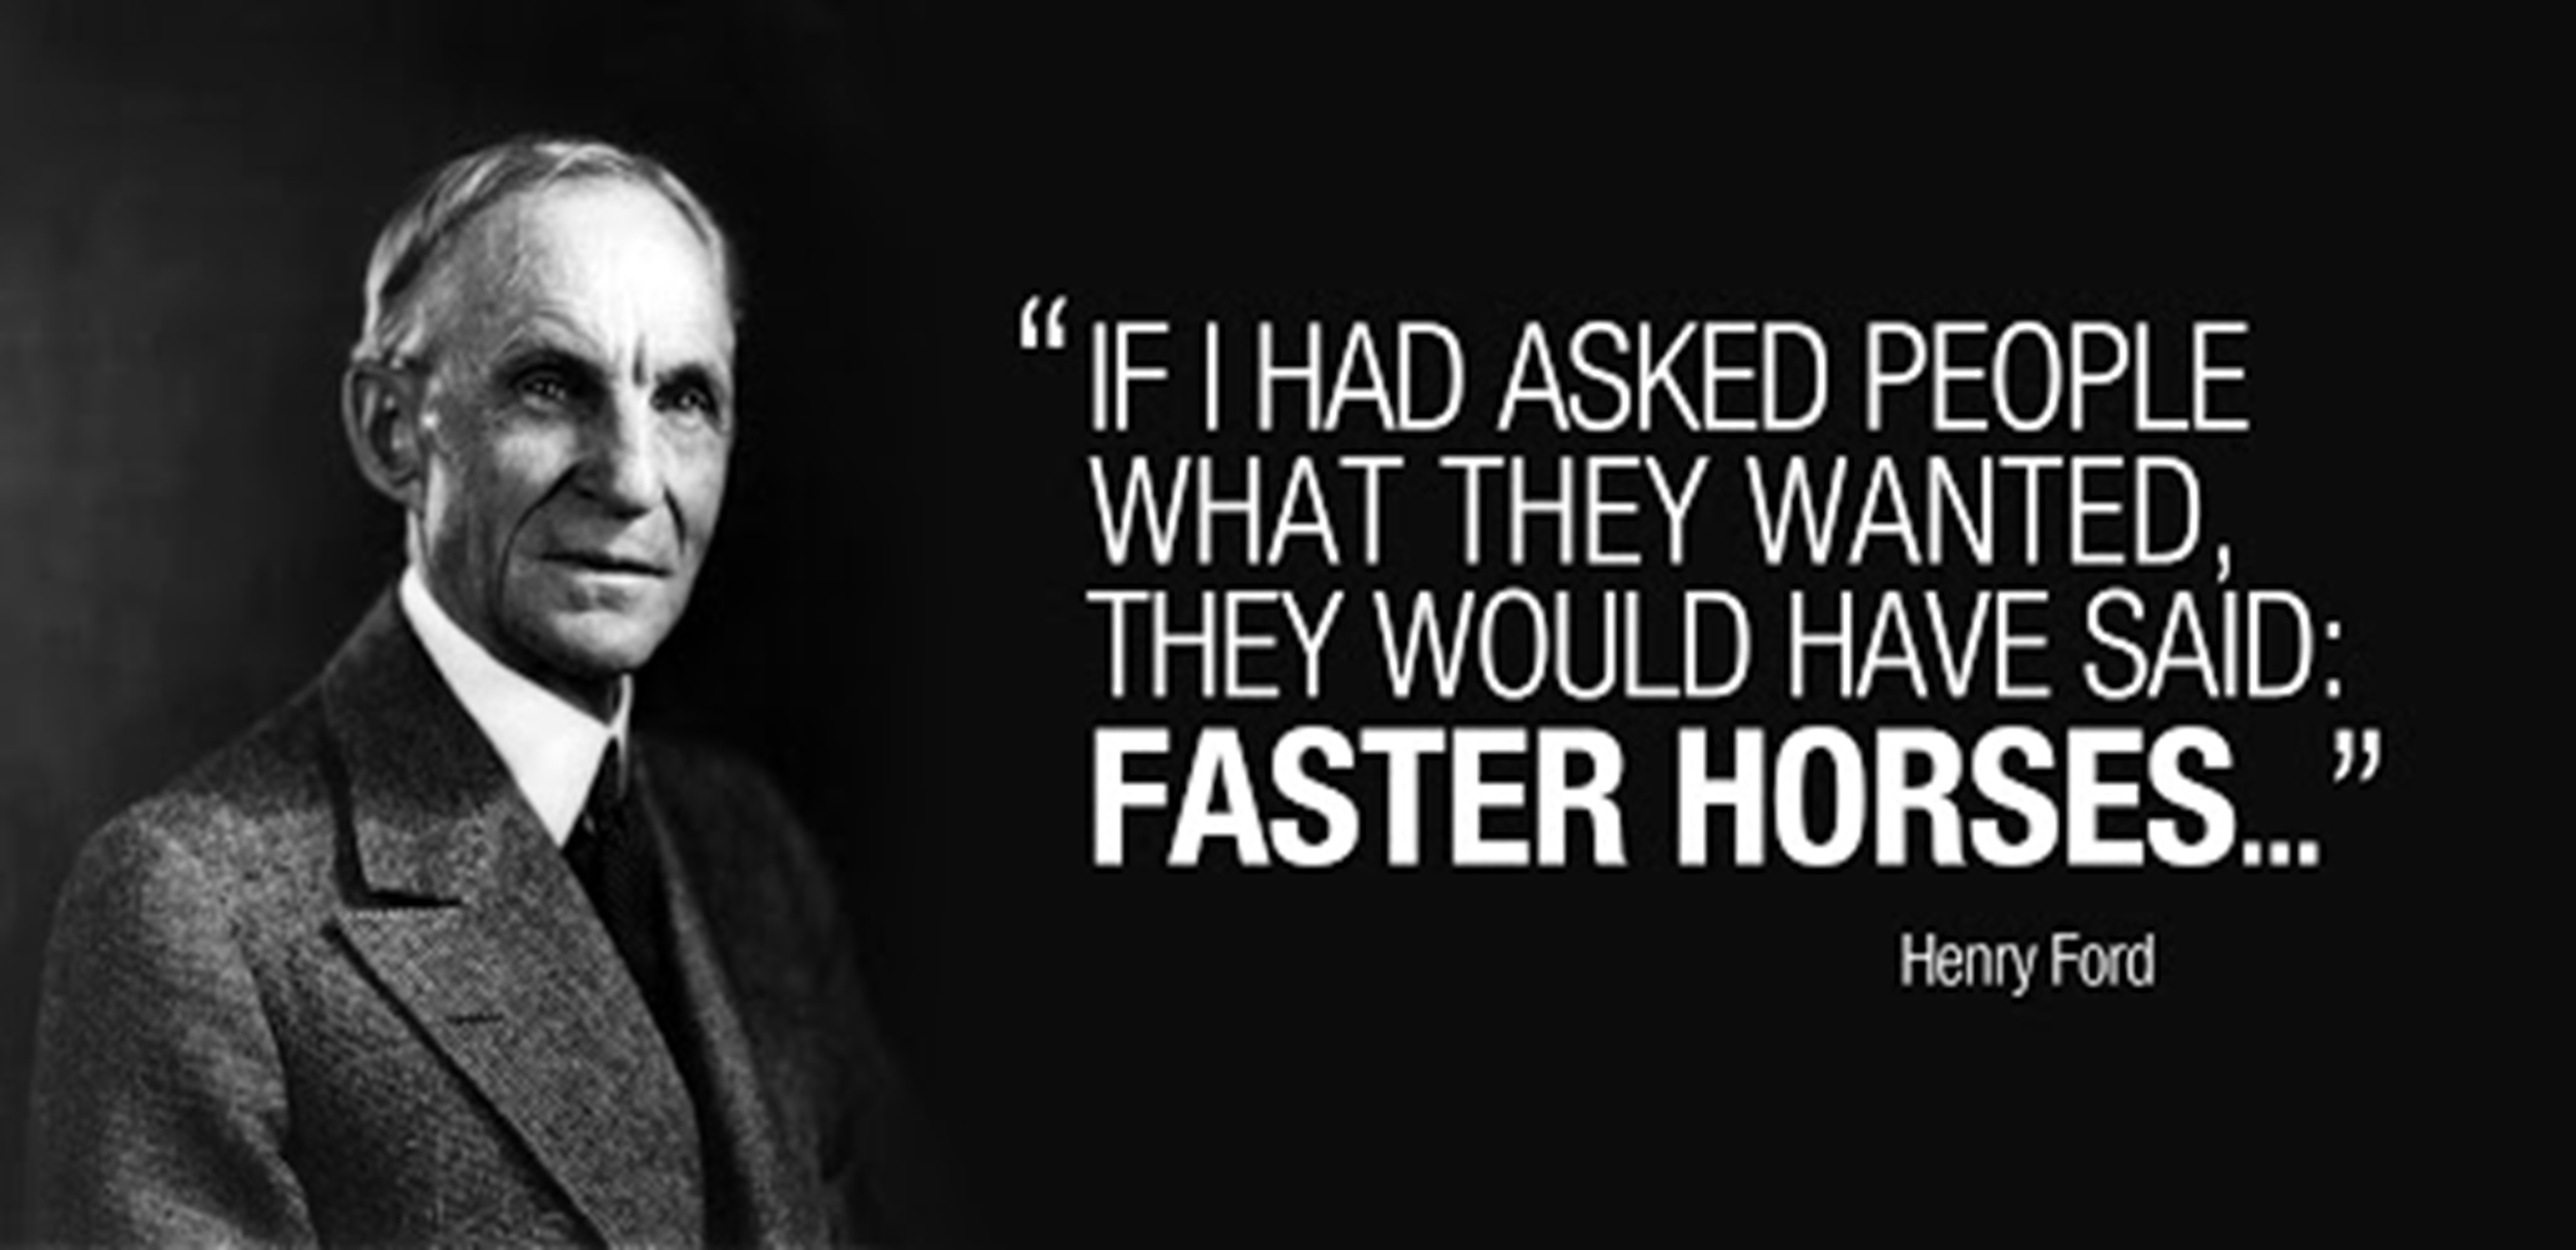 Henri Ford - faster horsed